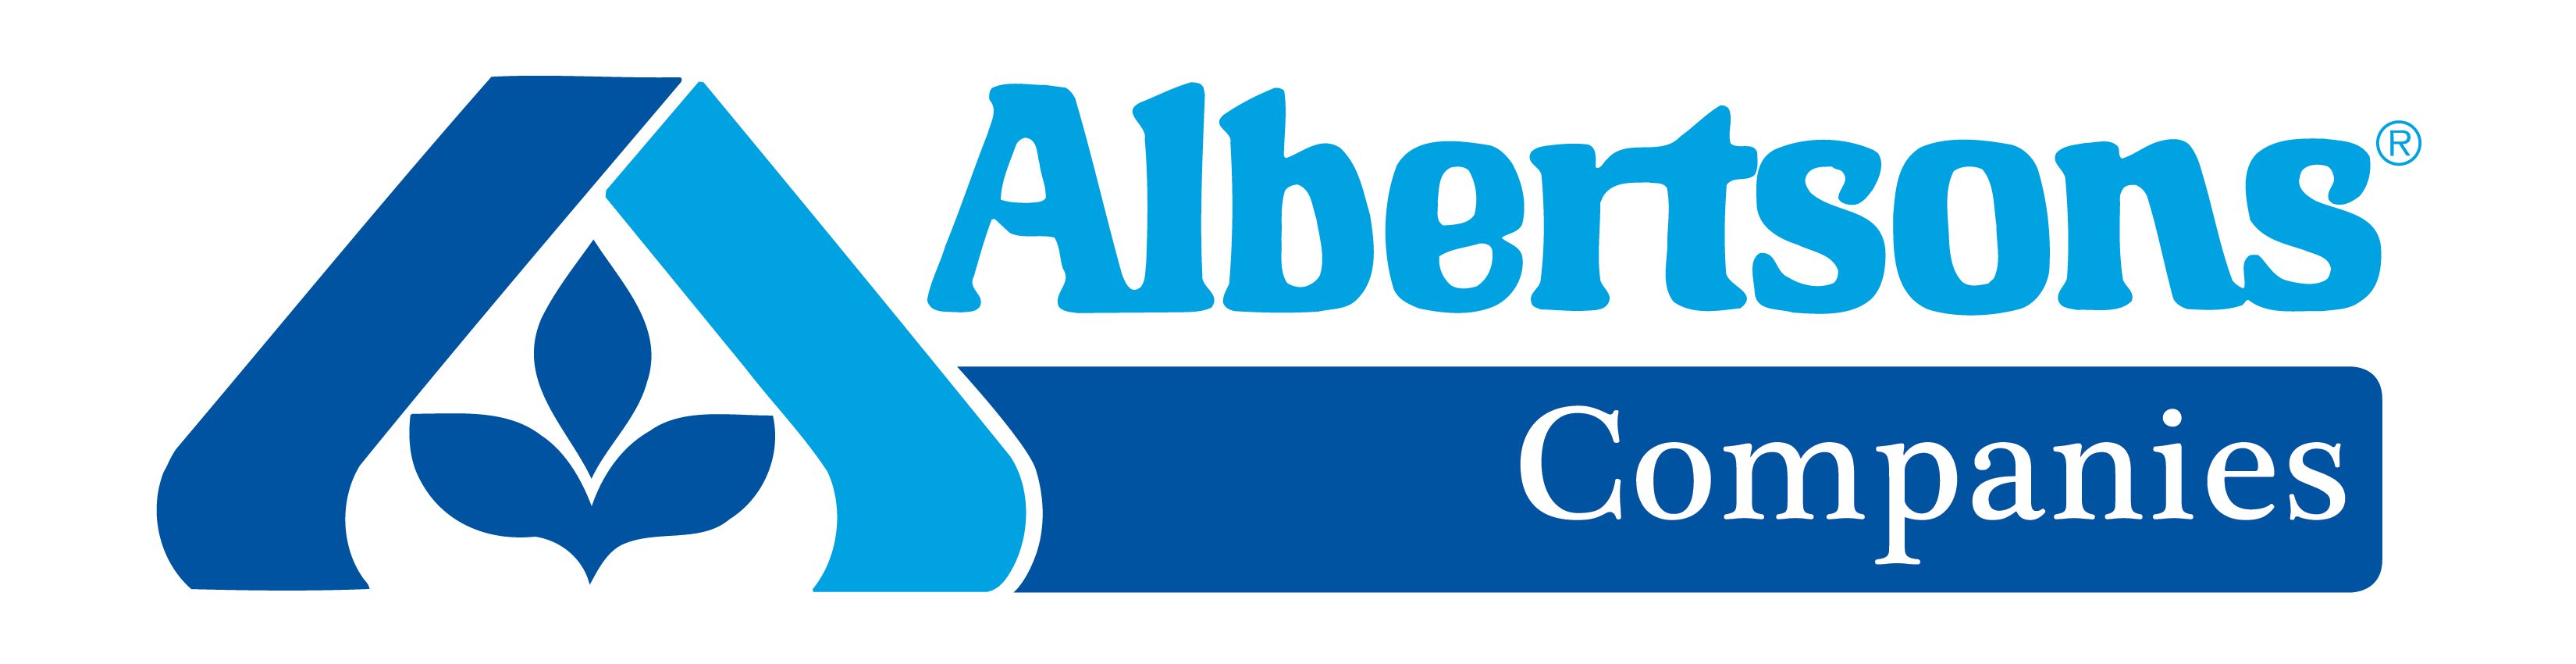 Albertsons Companies, FishWise partnership